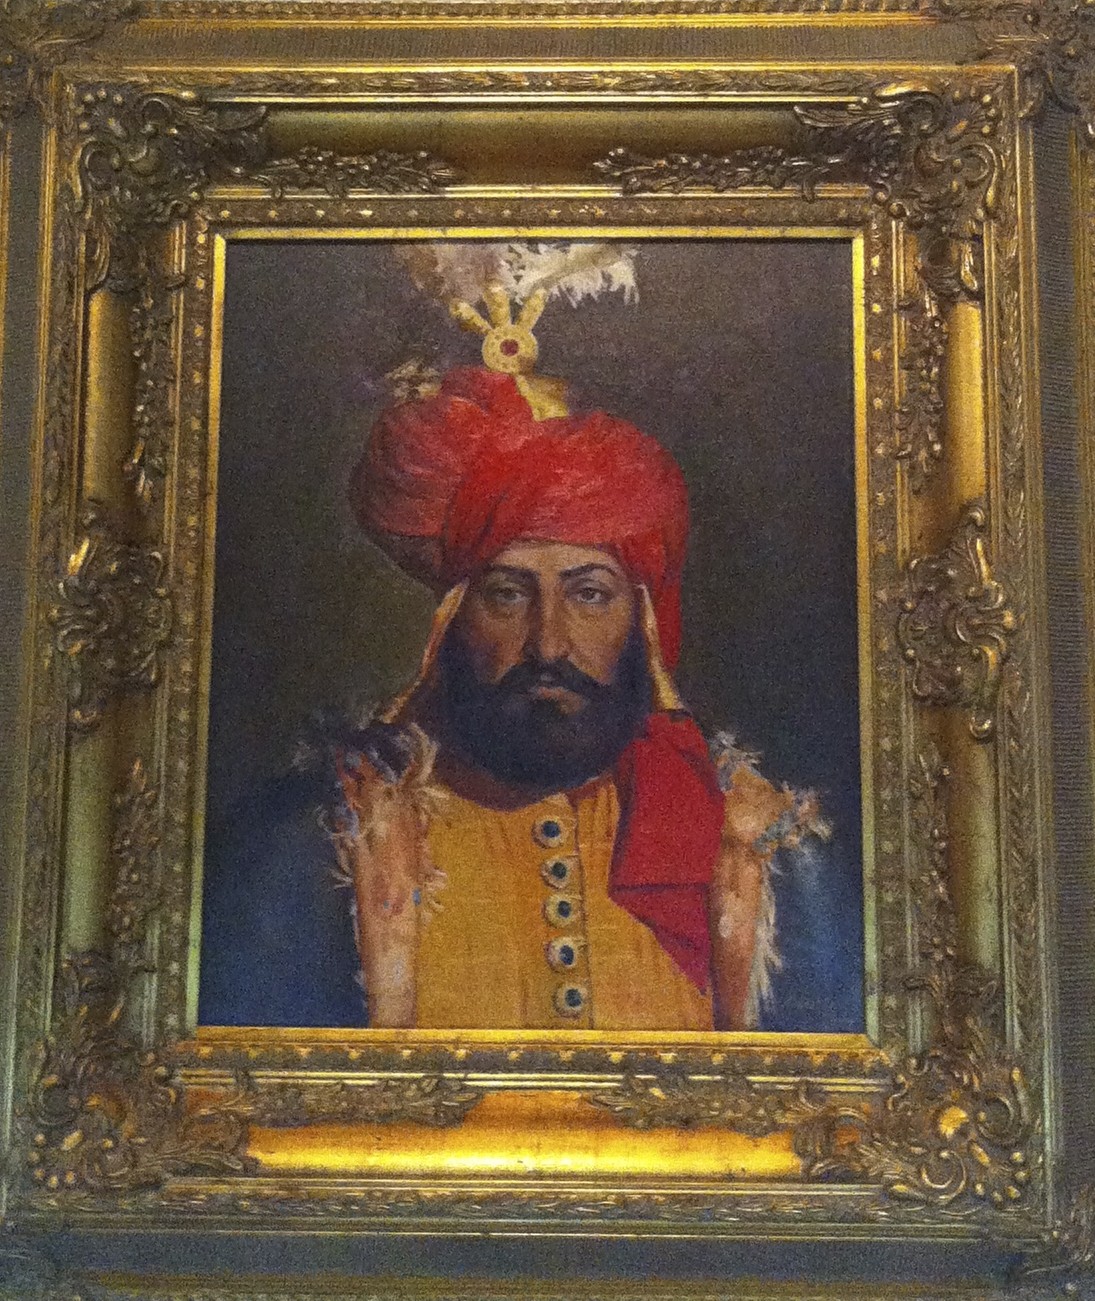 Султаны Османской империи: Мурад IV